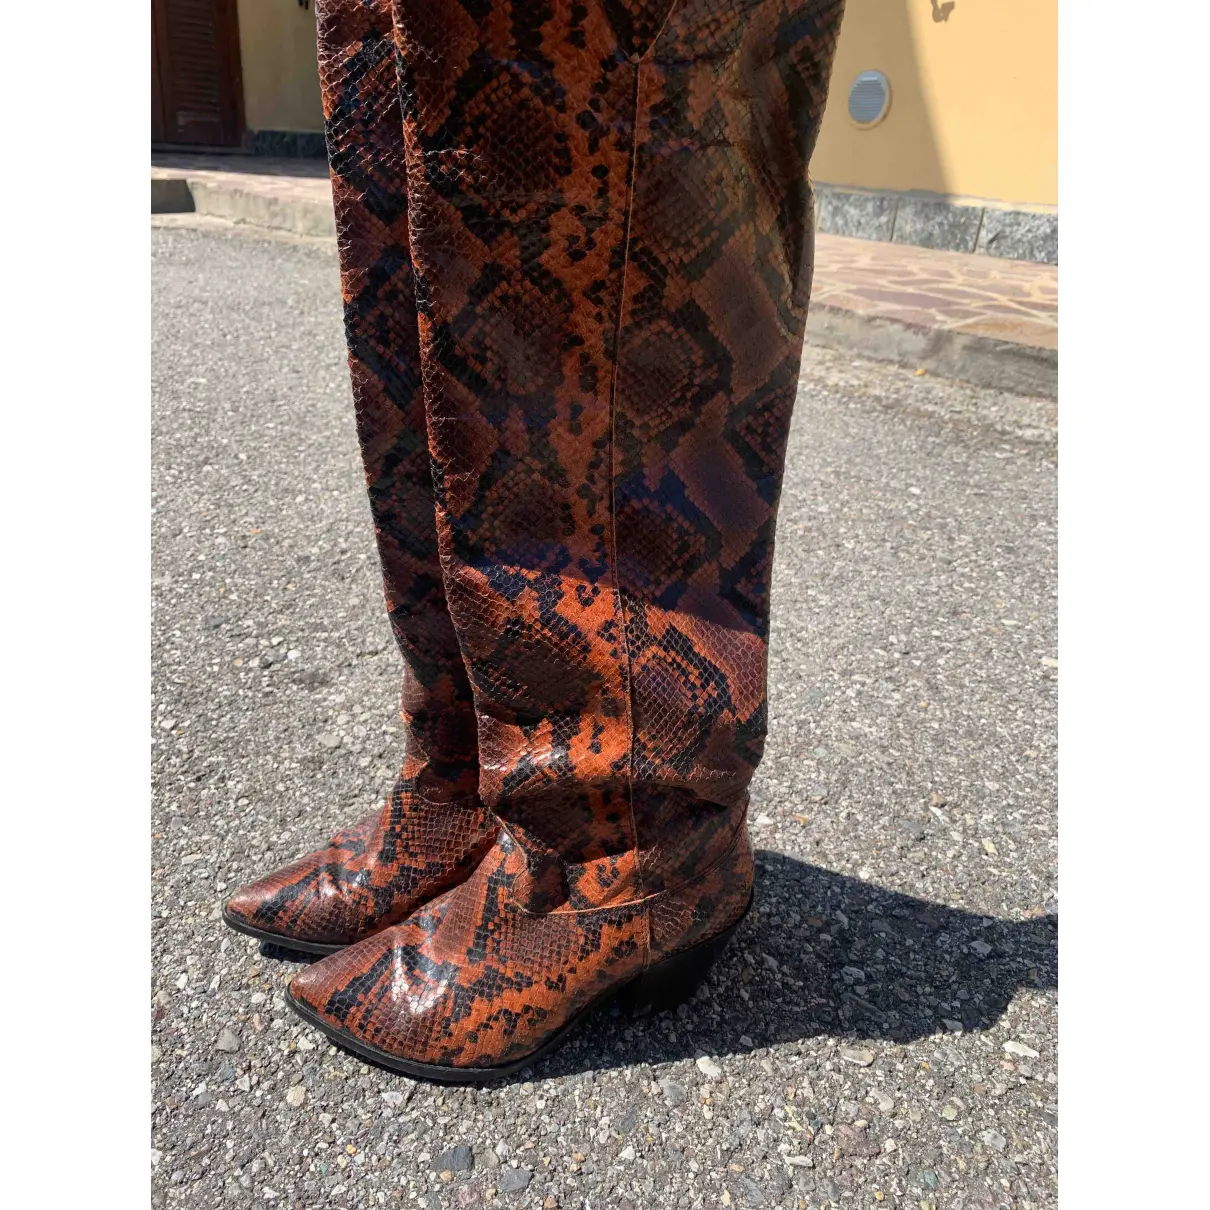 Buy Poesie Veneziane Leather cowboy boots online